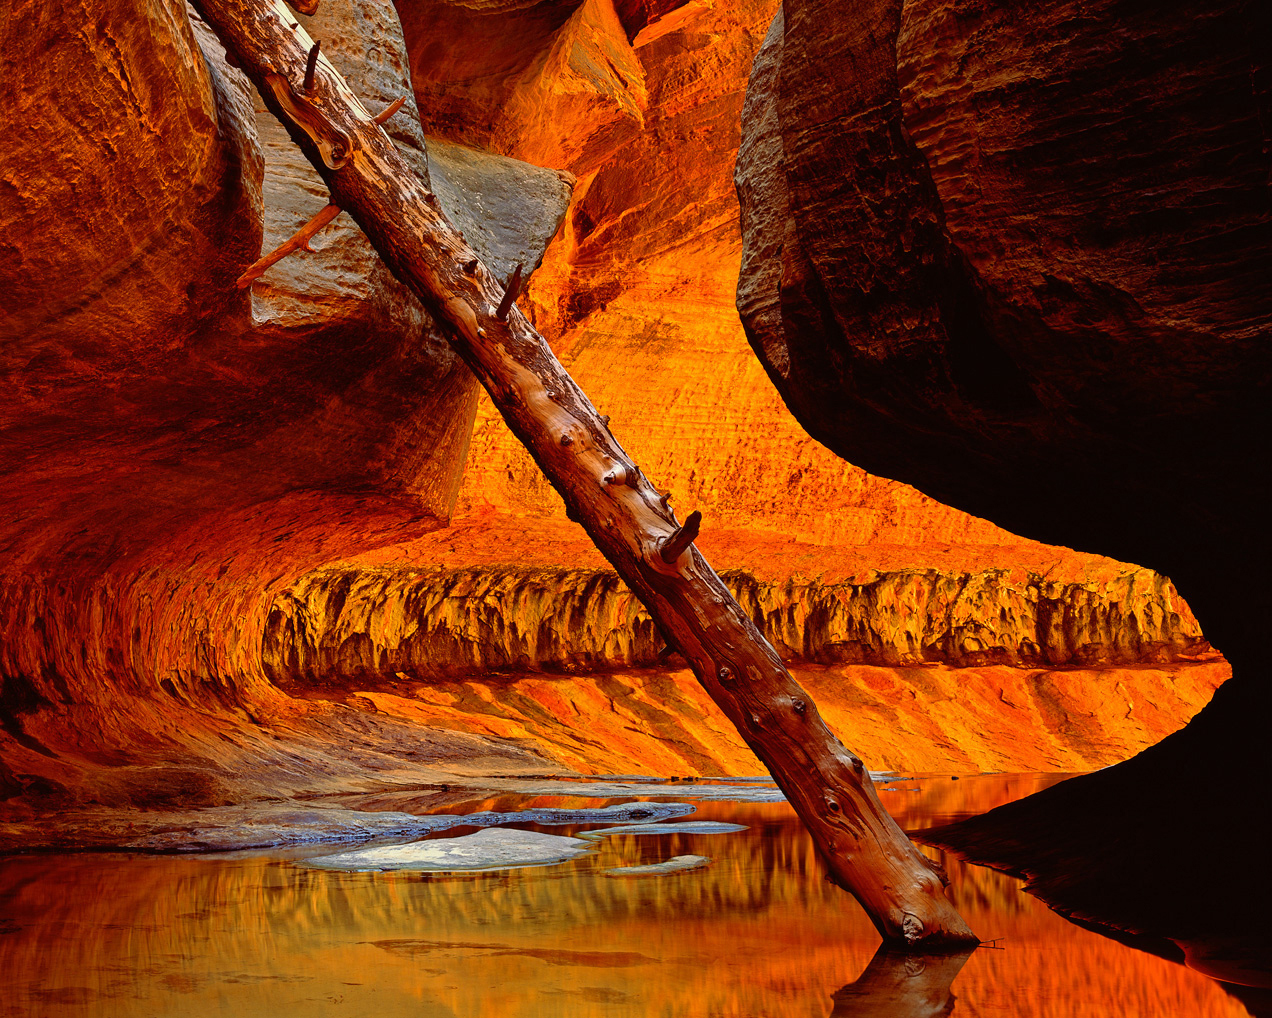 North Pole slot canyon photograph at Zion National Park